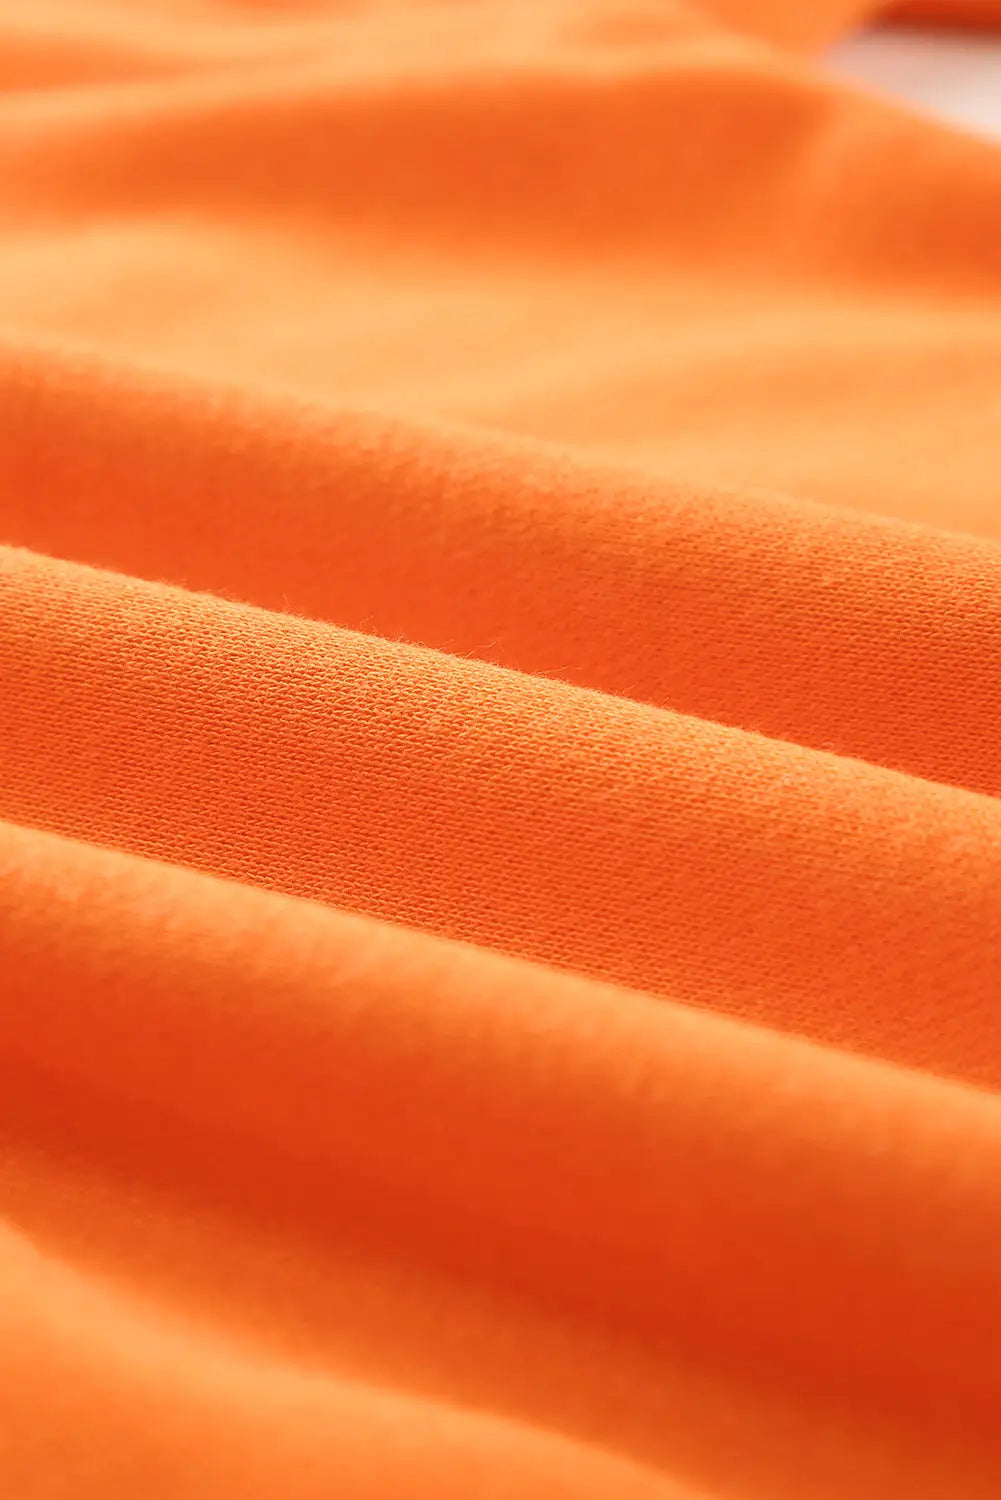 Orange plain crew neck pullover sweatshirt - tops